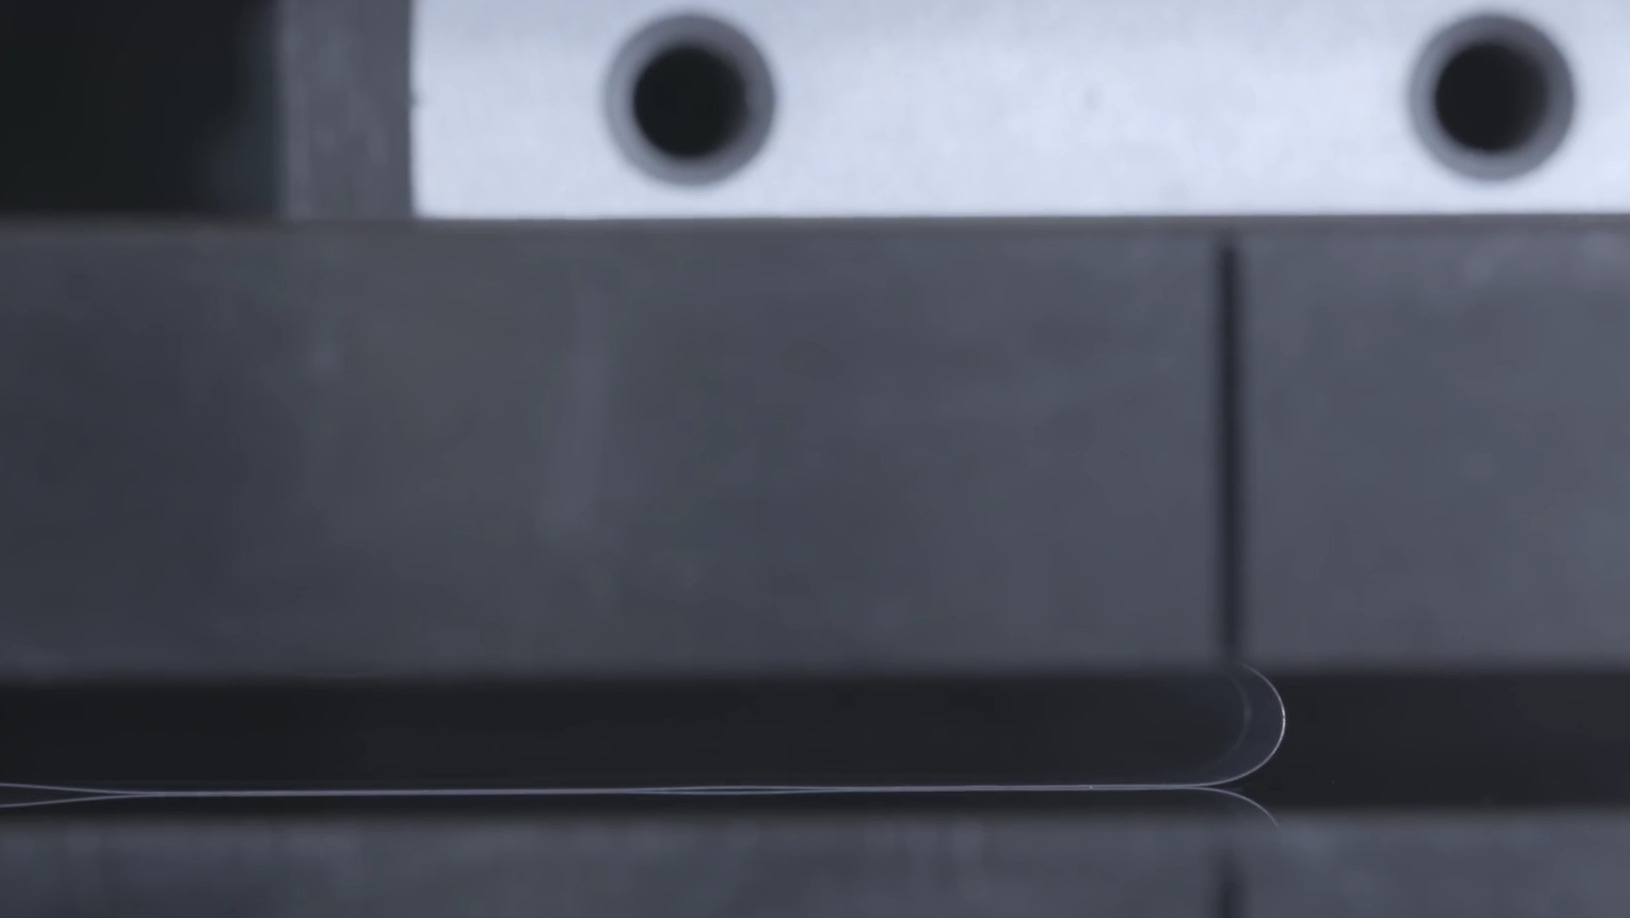 Glass durability test for the Galaxy Z Flip 4